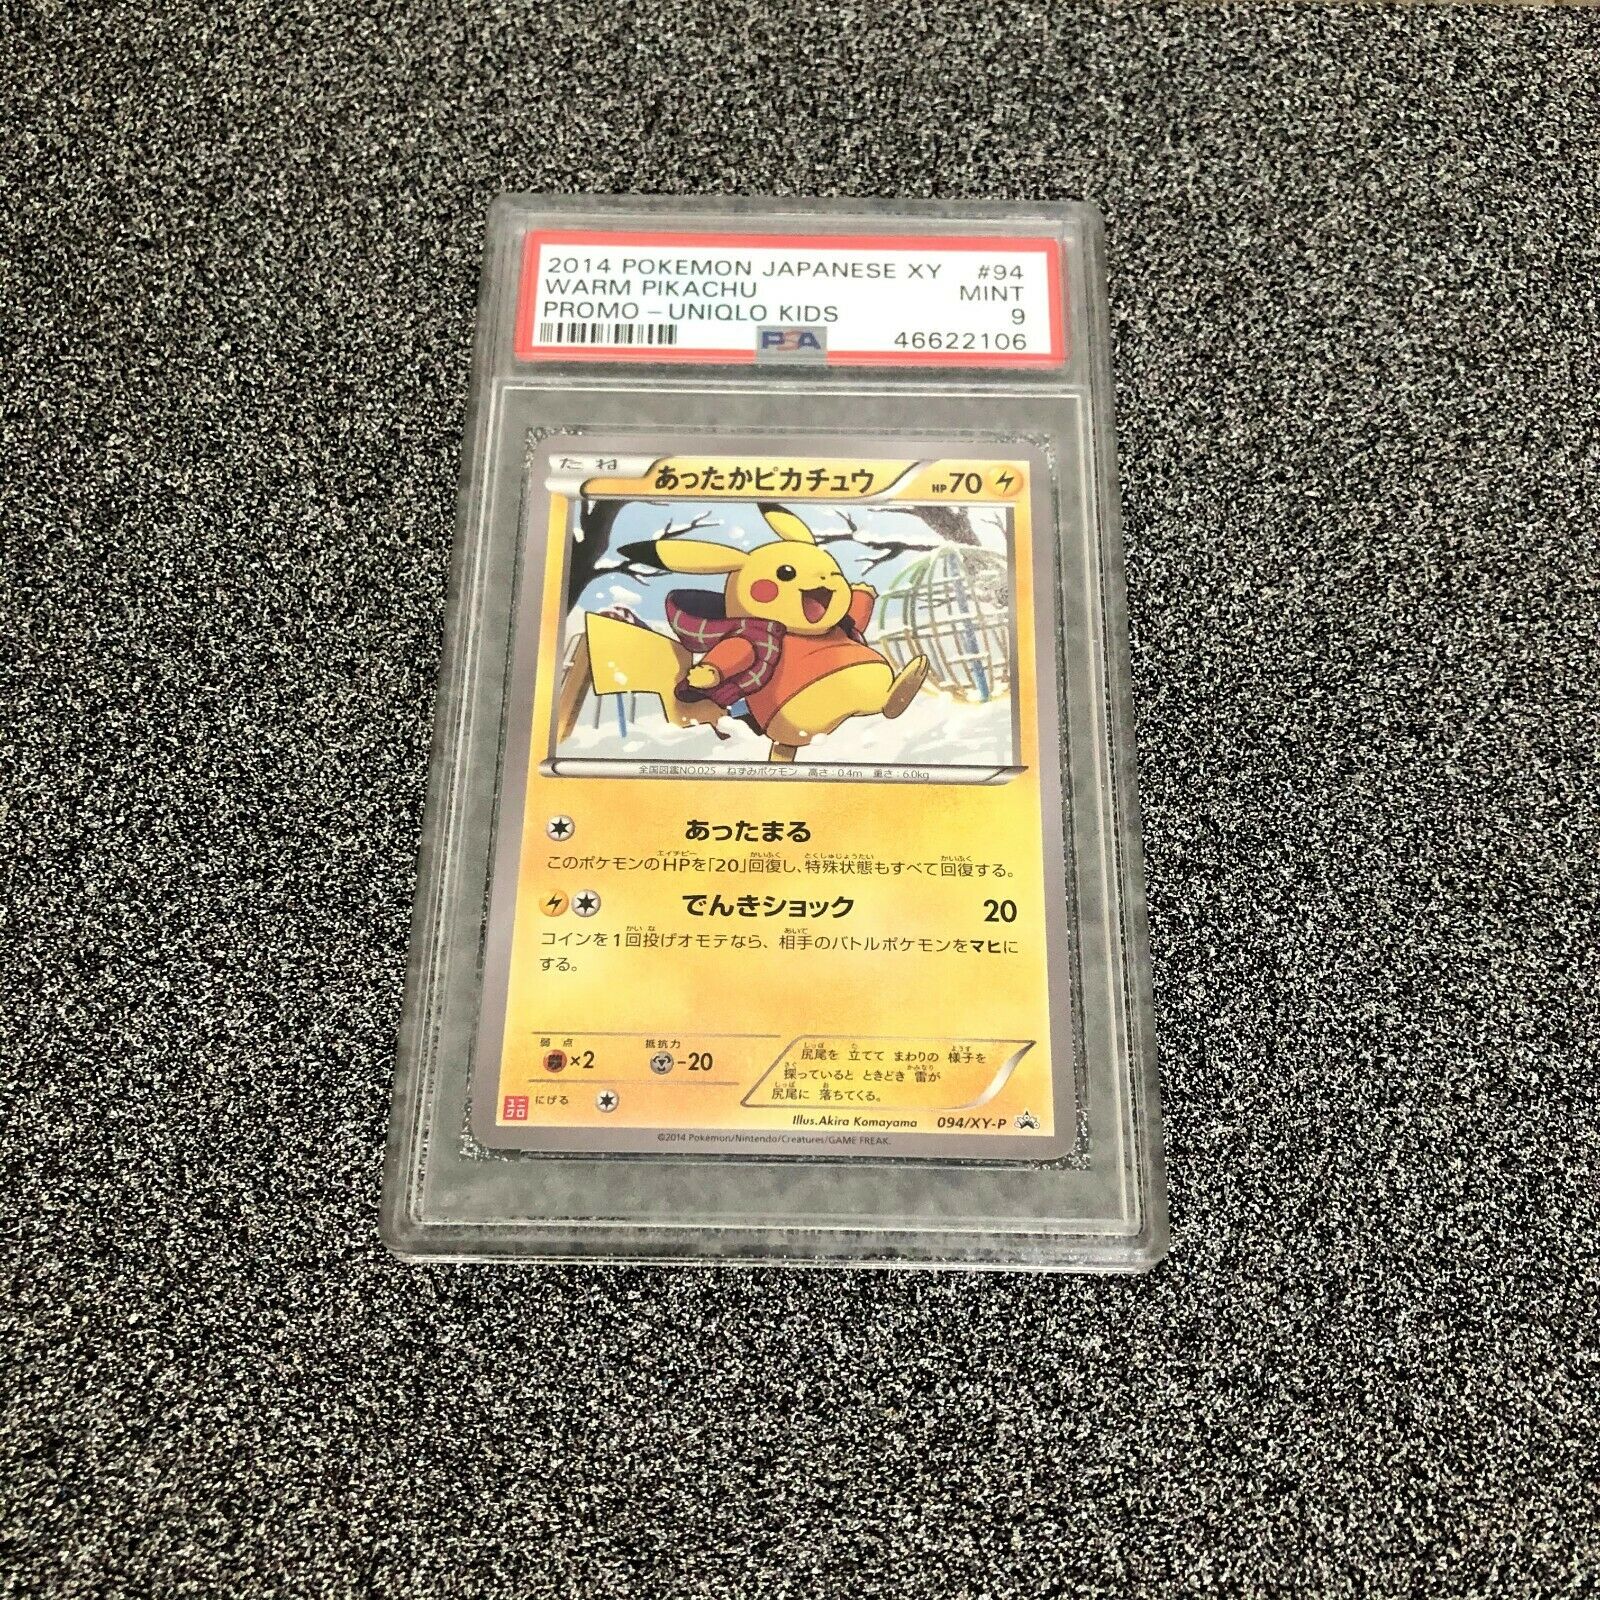 Pokemon Warm Pikachu 094XYP Uniqlo Kids Japanese Promo PSA 9 RARE